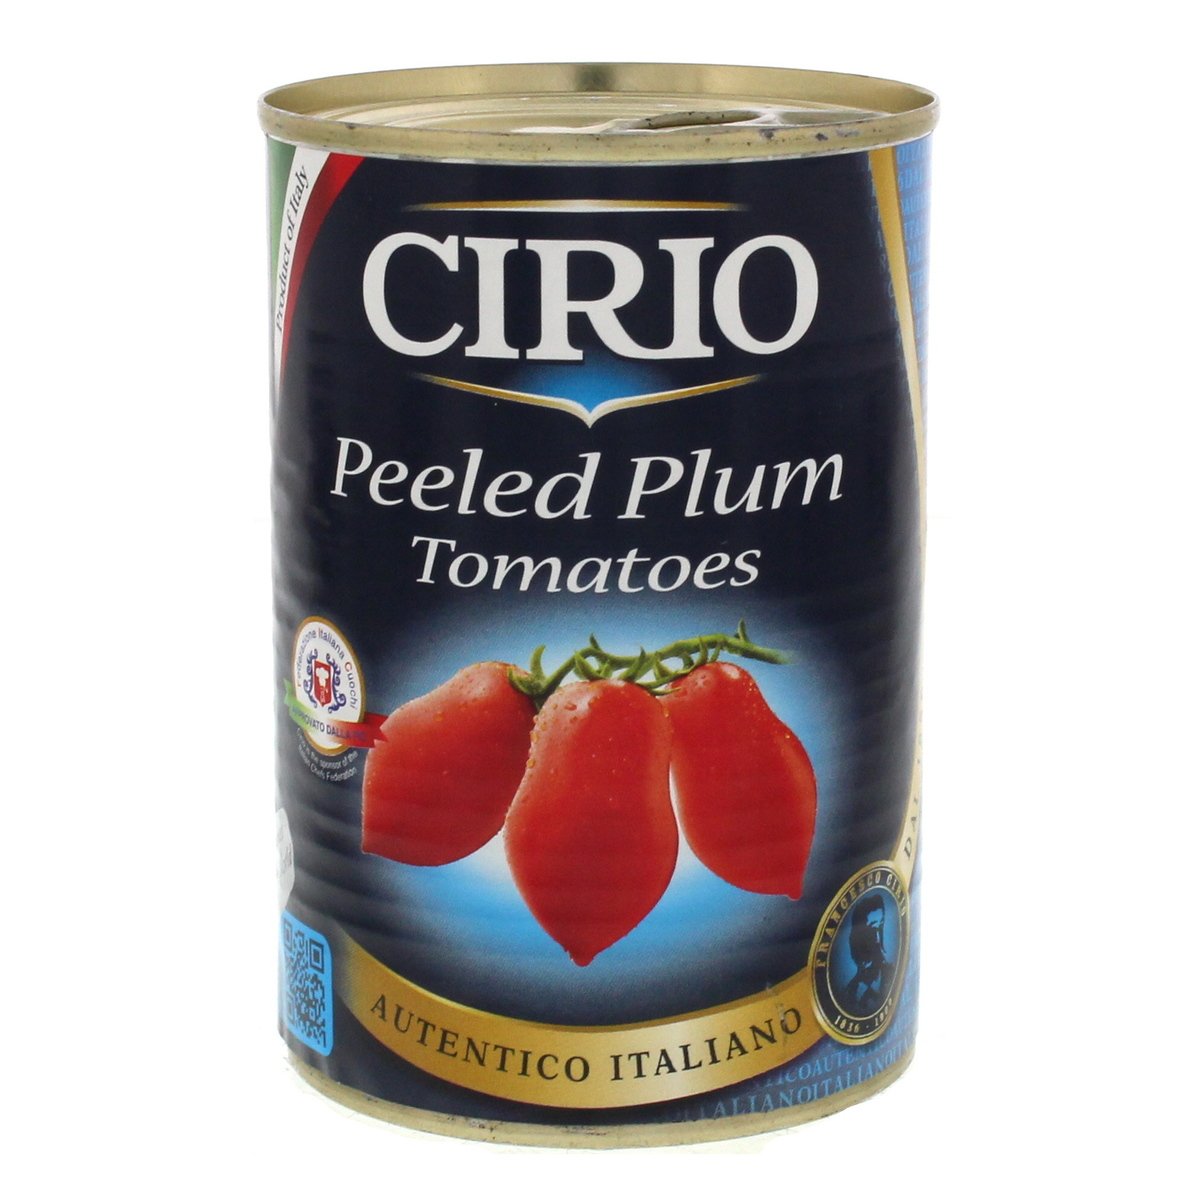 Cirio Peeled Plum Tomatoes Autentico Italiano 400g